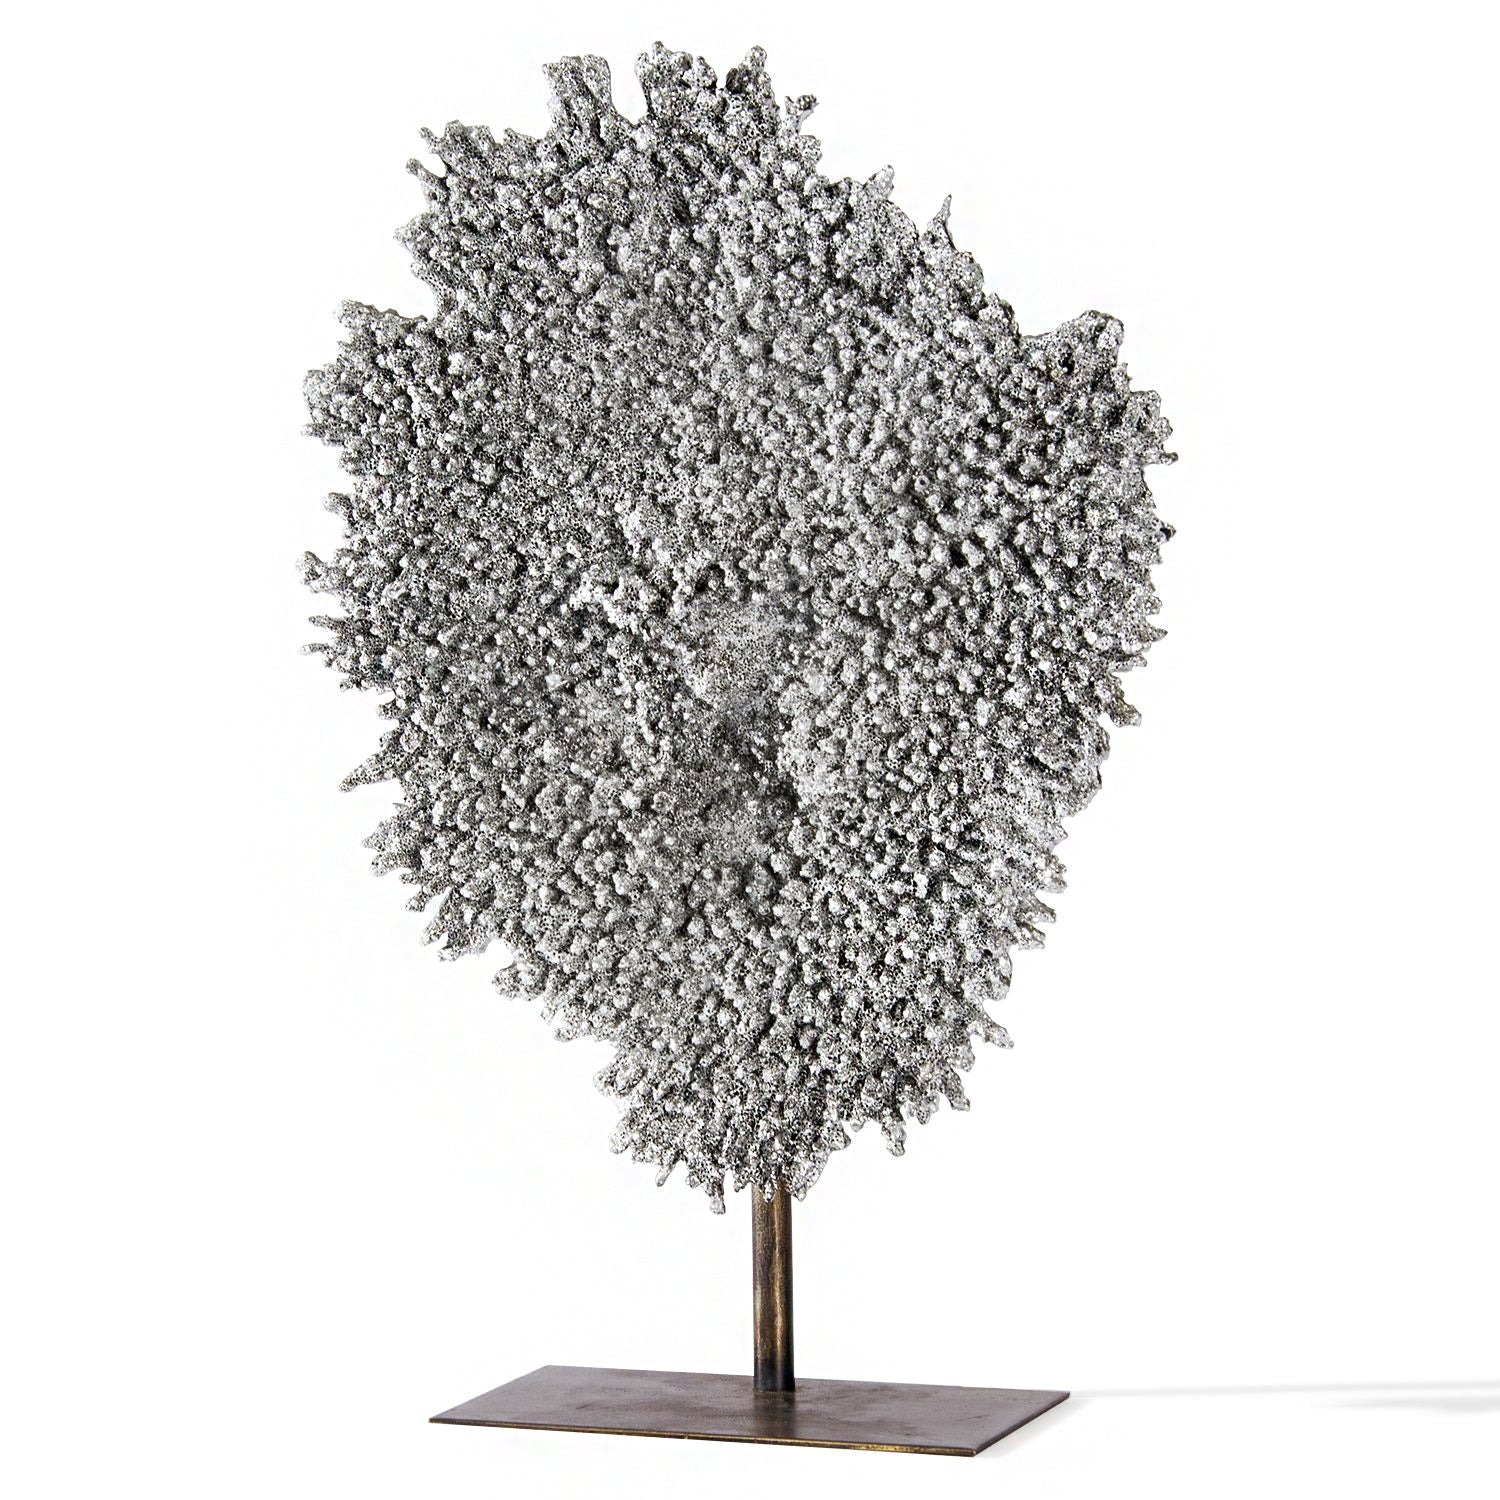 Coral Silver Sculpture, 21"H